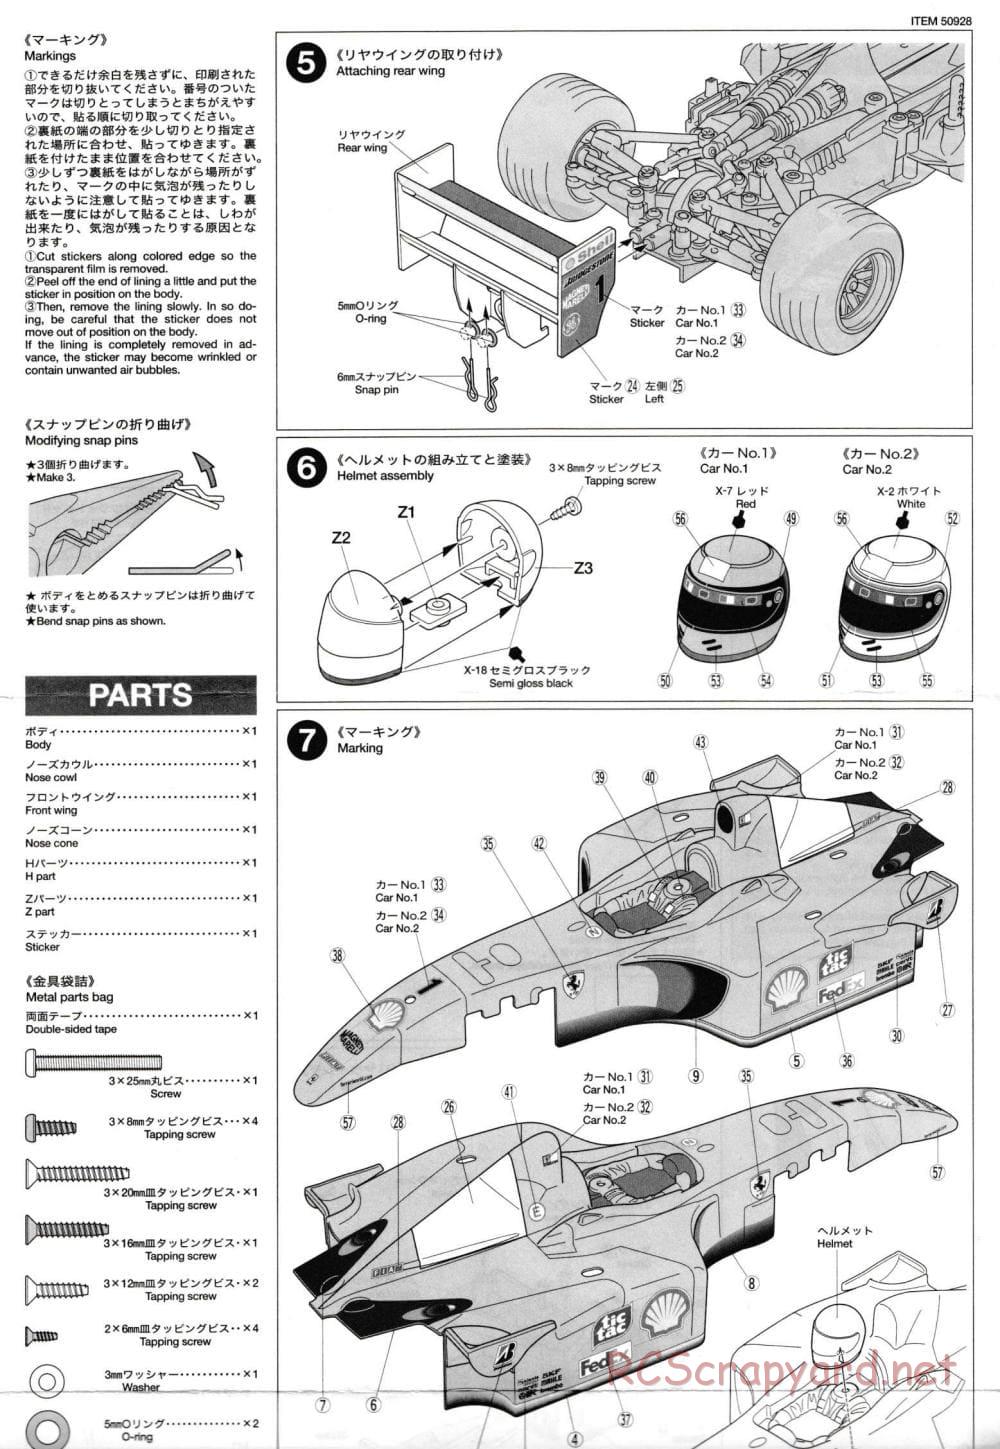 Tamiya - Ferrari F2001 - F201 Chassis - Body Manual - Page 3